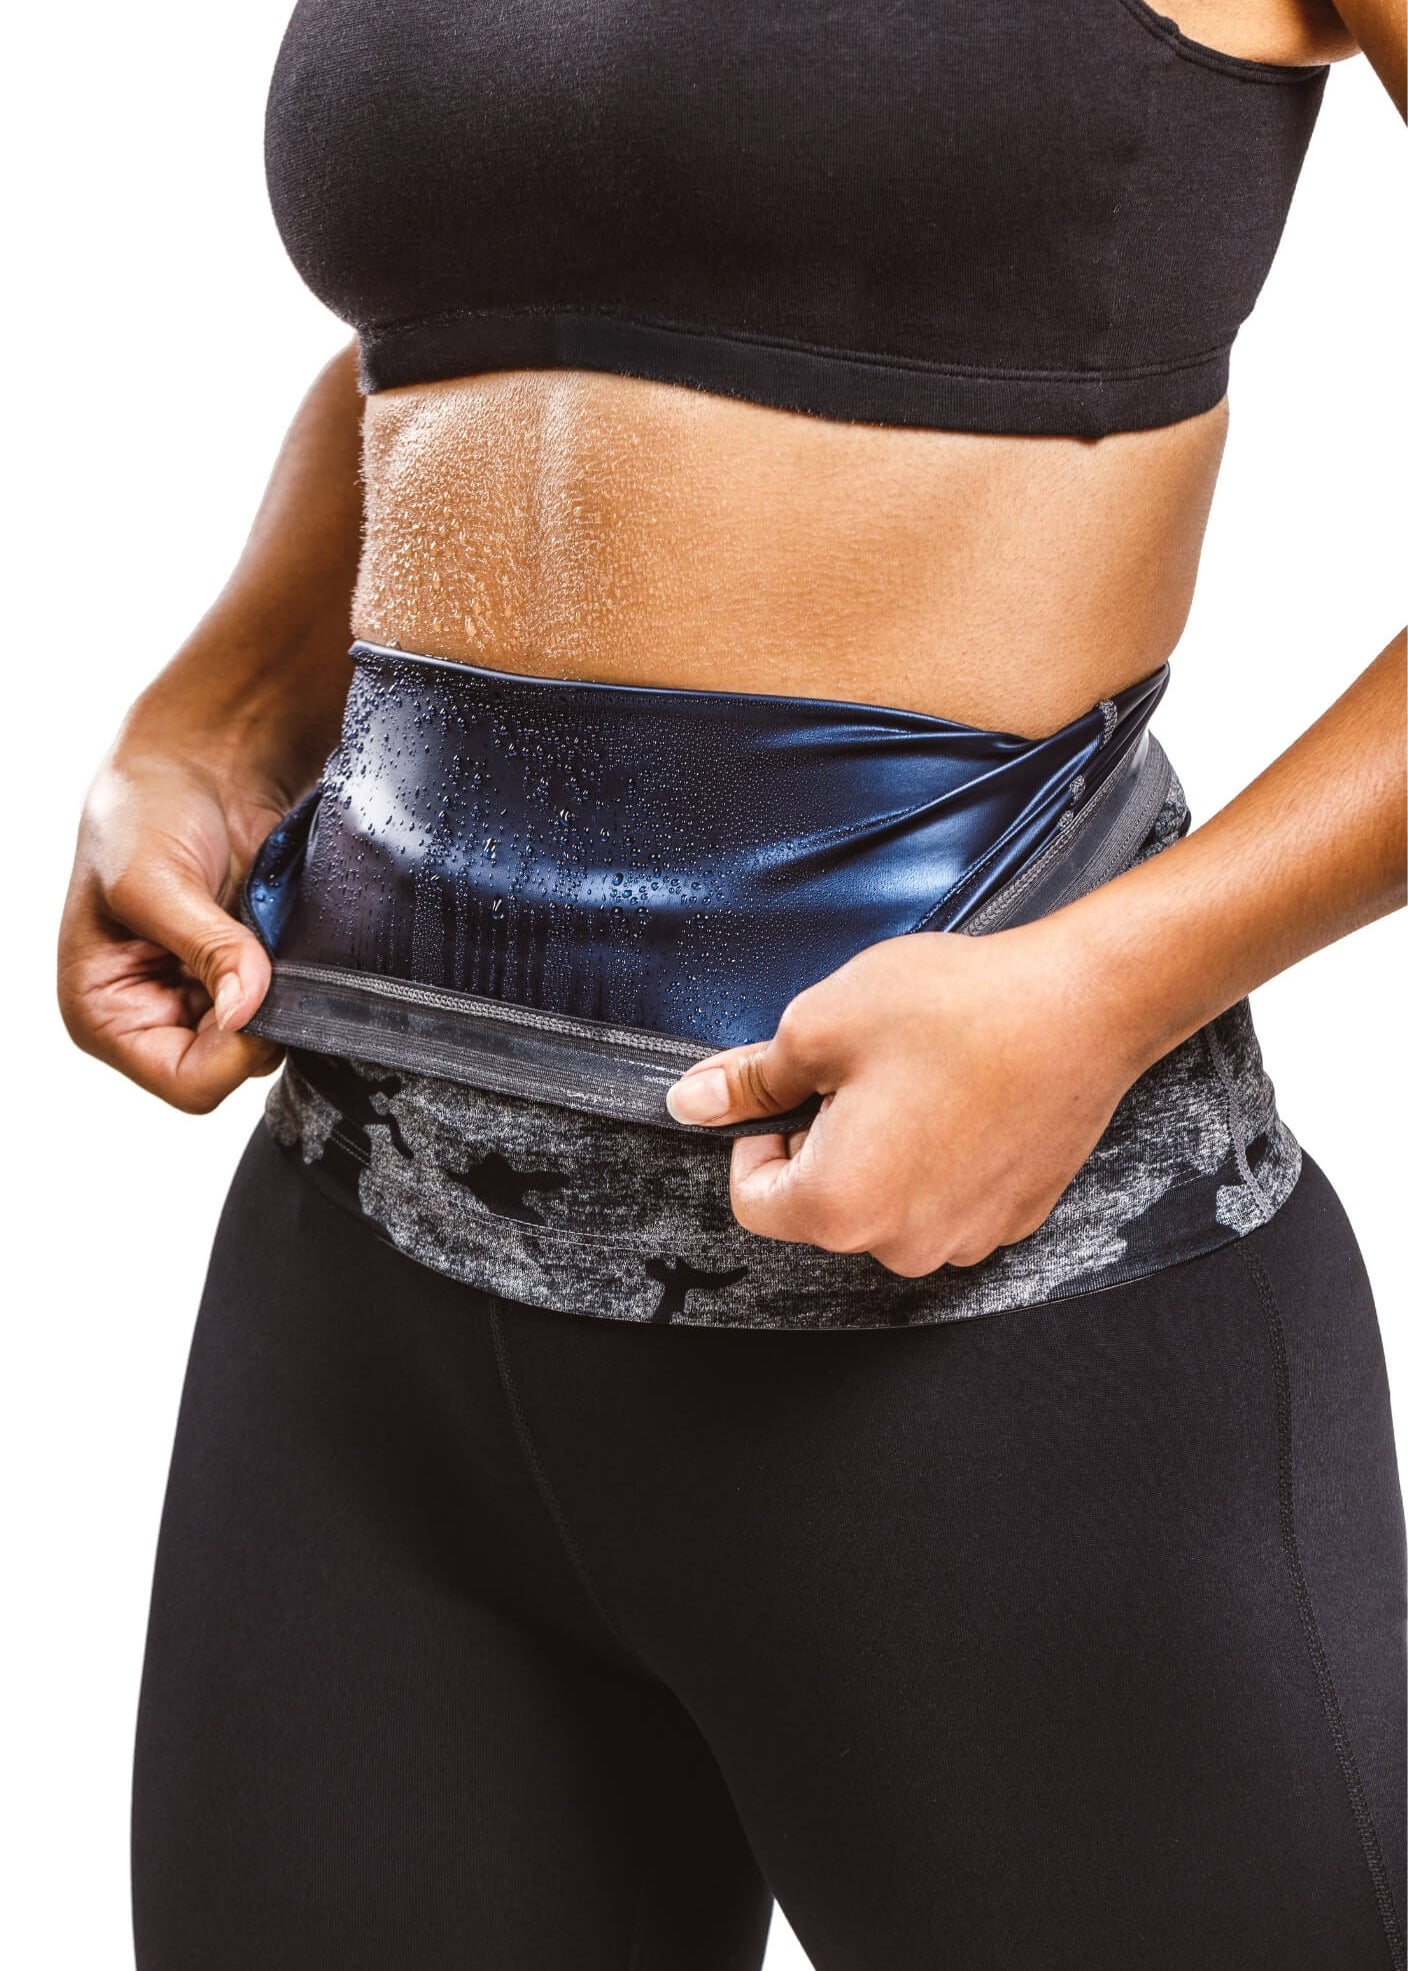 MANIFIQUE Womens Zipper Waist Trainer Body Shaper Slimming Sports